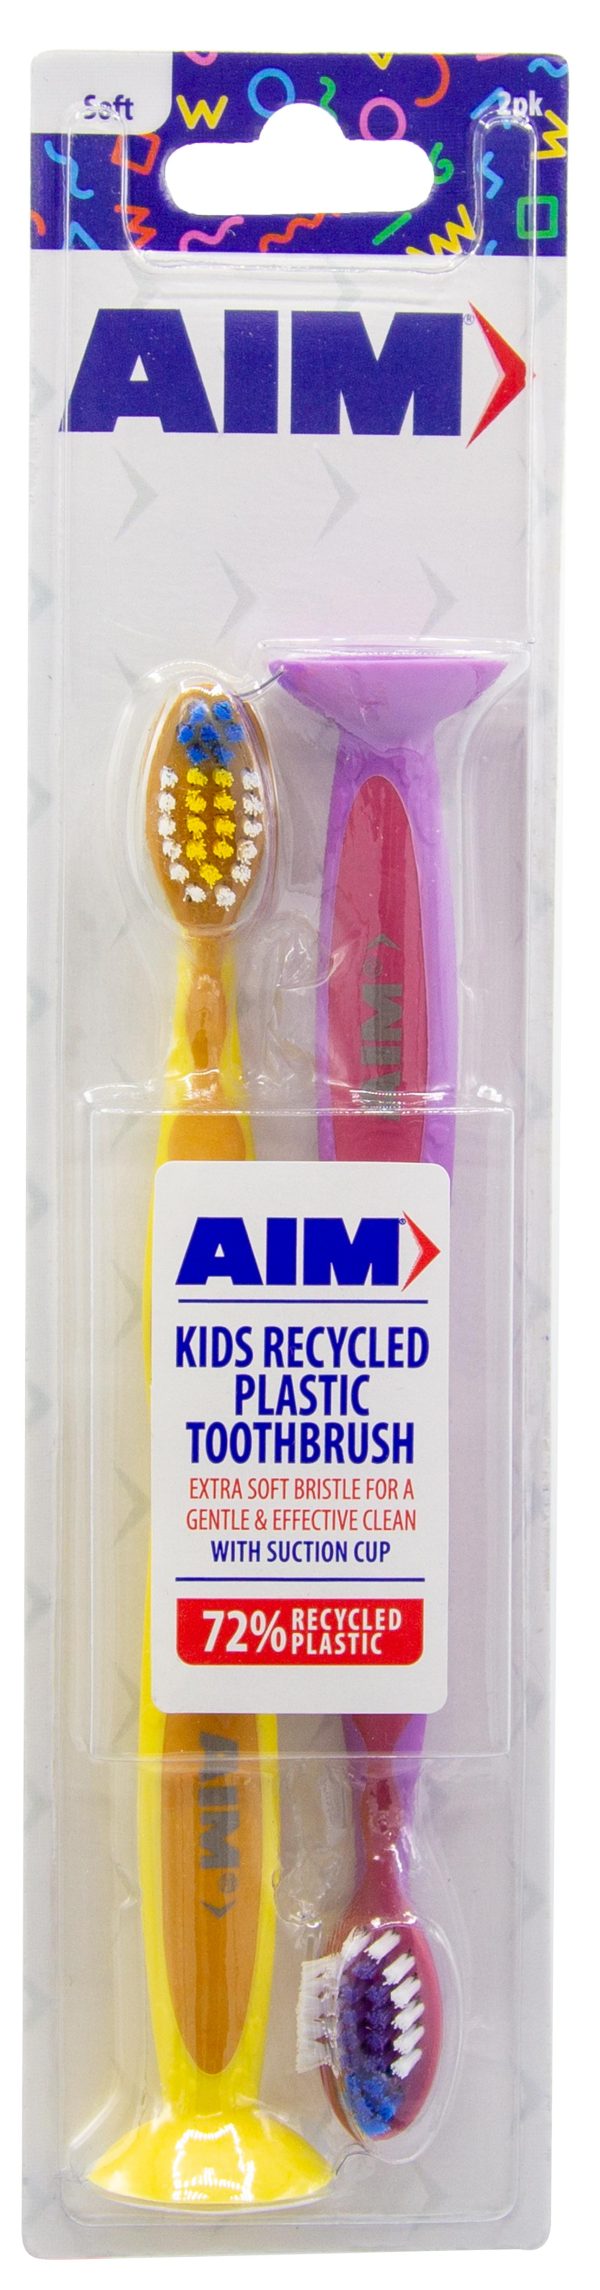 AIM-Kids-recycled-plastic-2pk-2